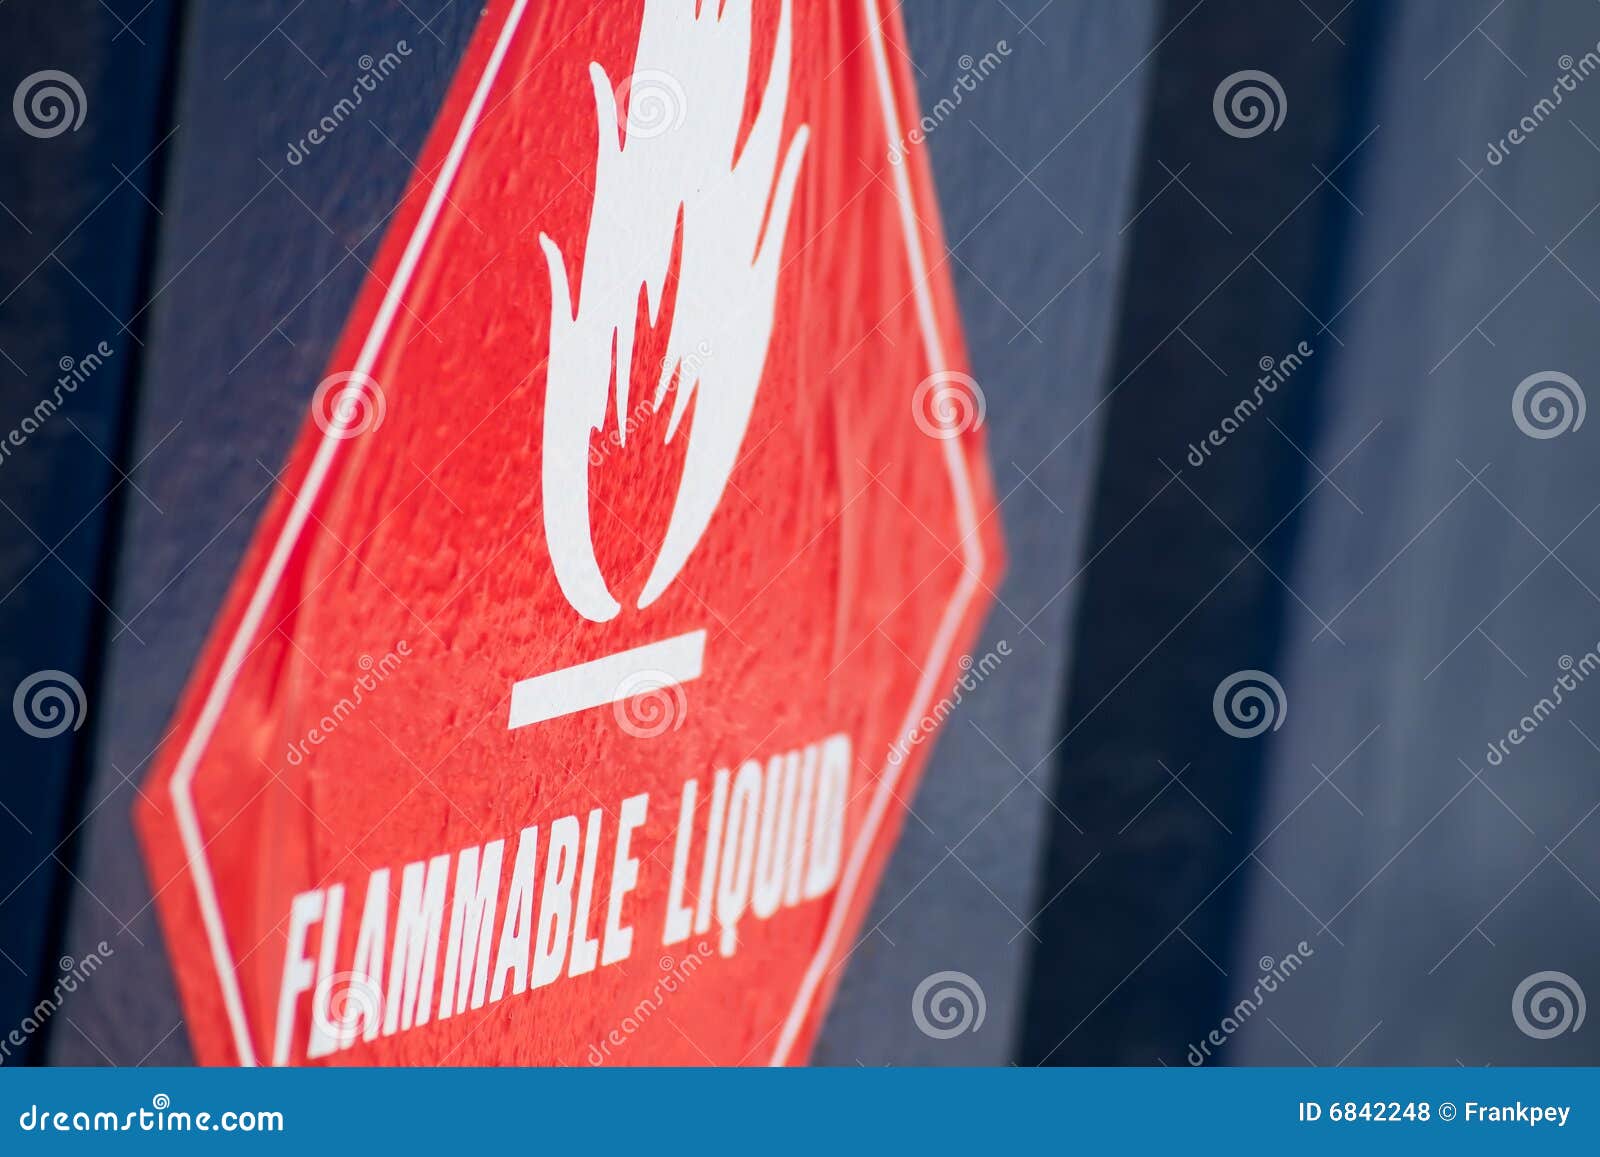 flammable liquid